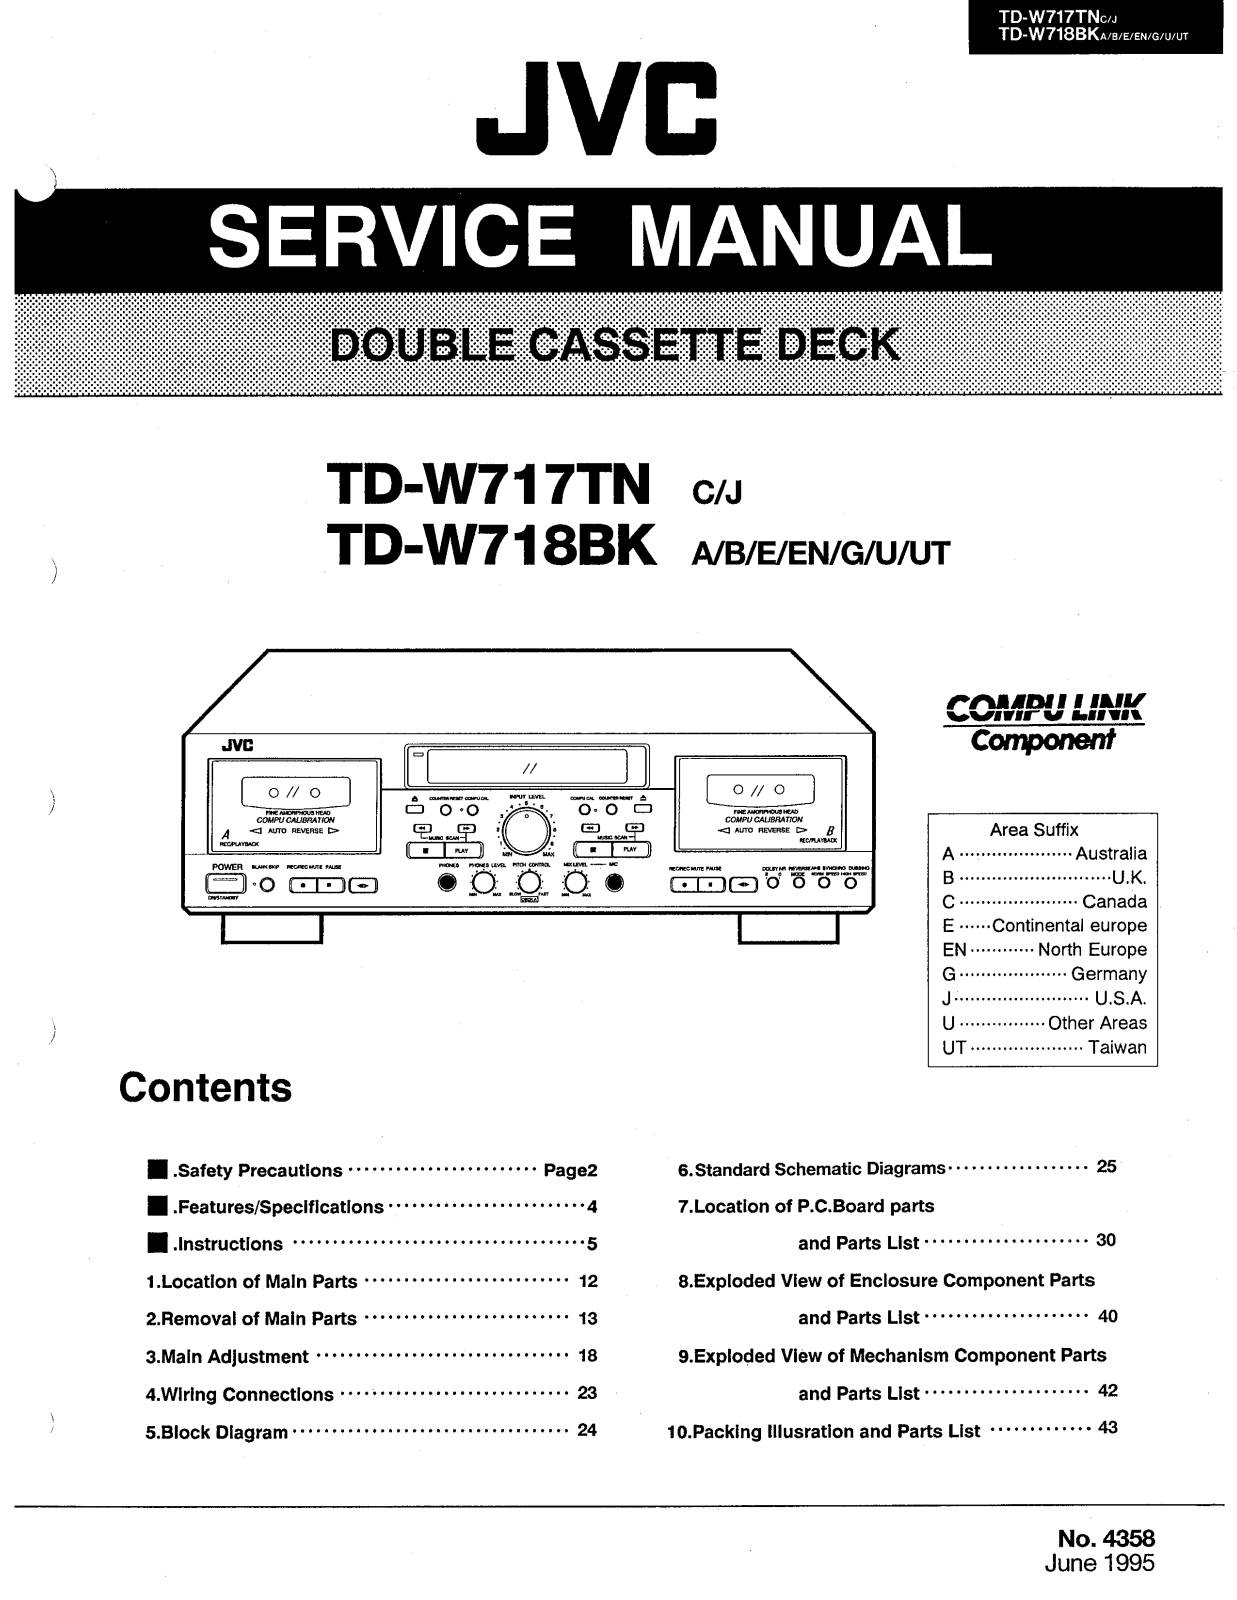 JVC TD-W717